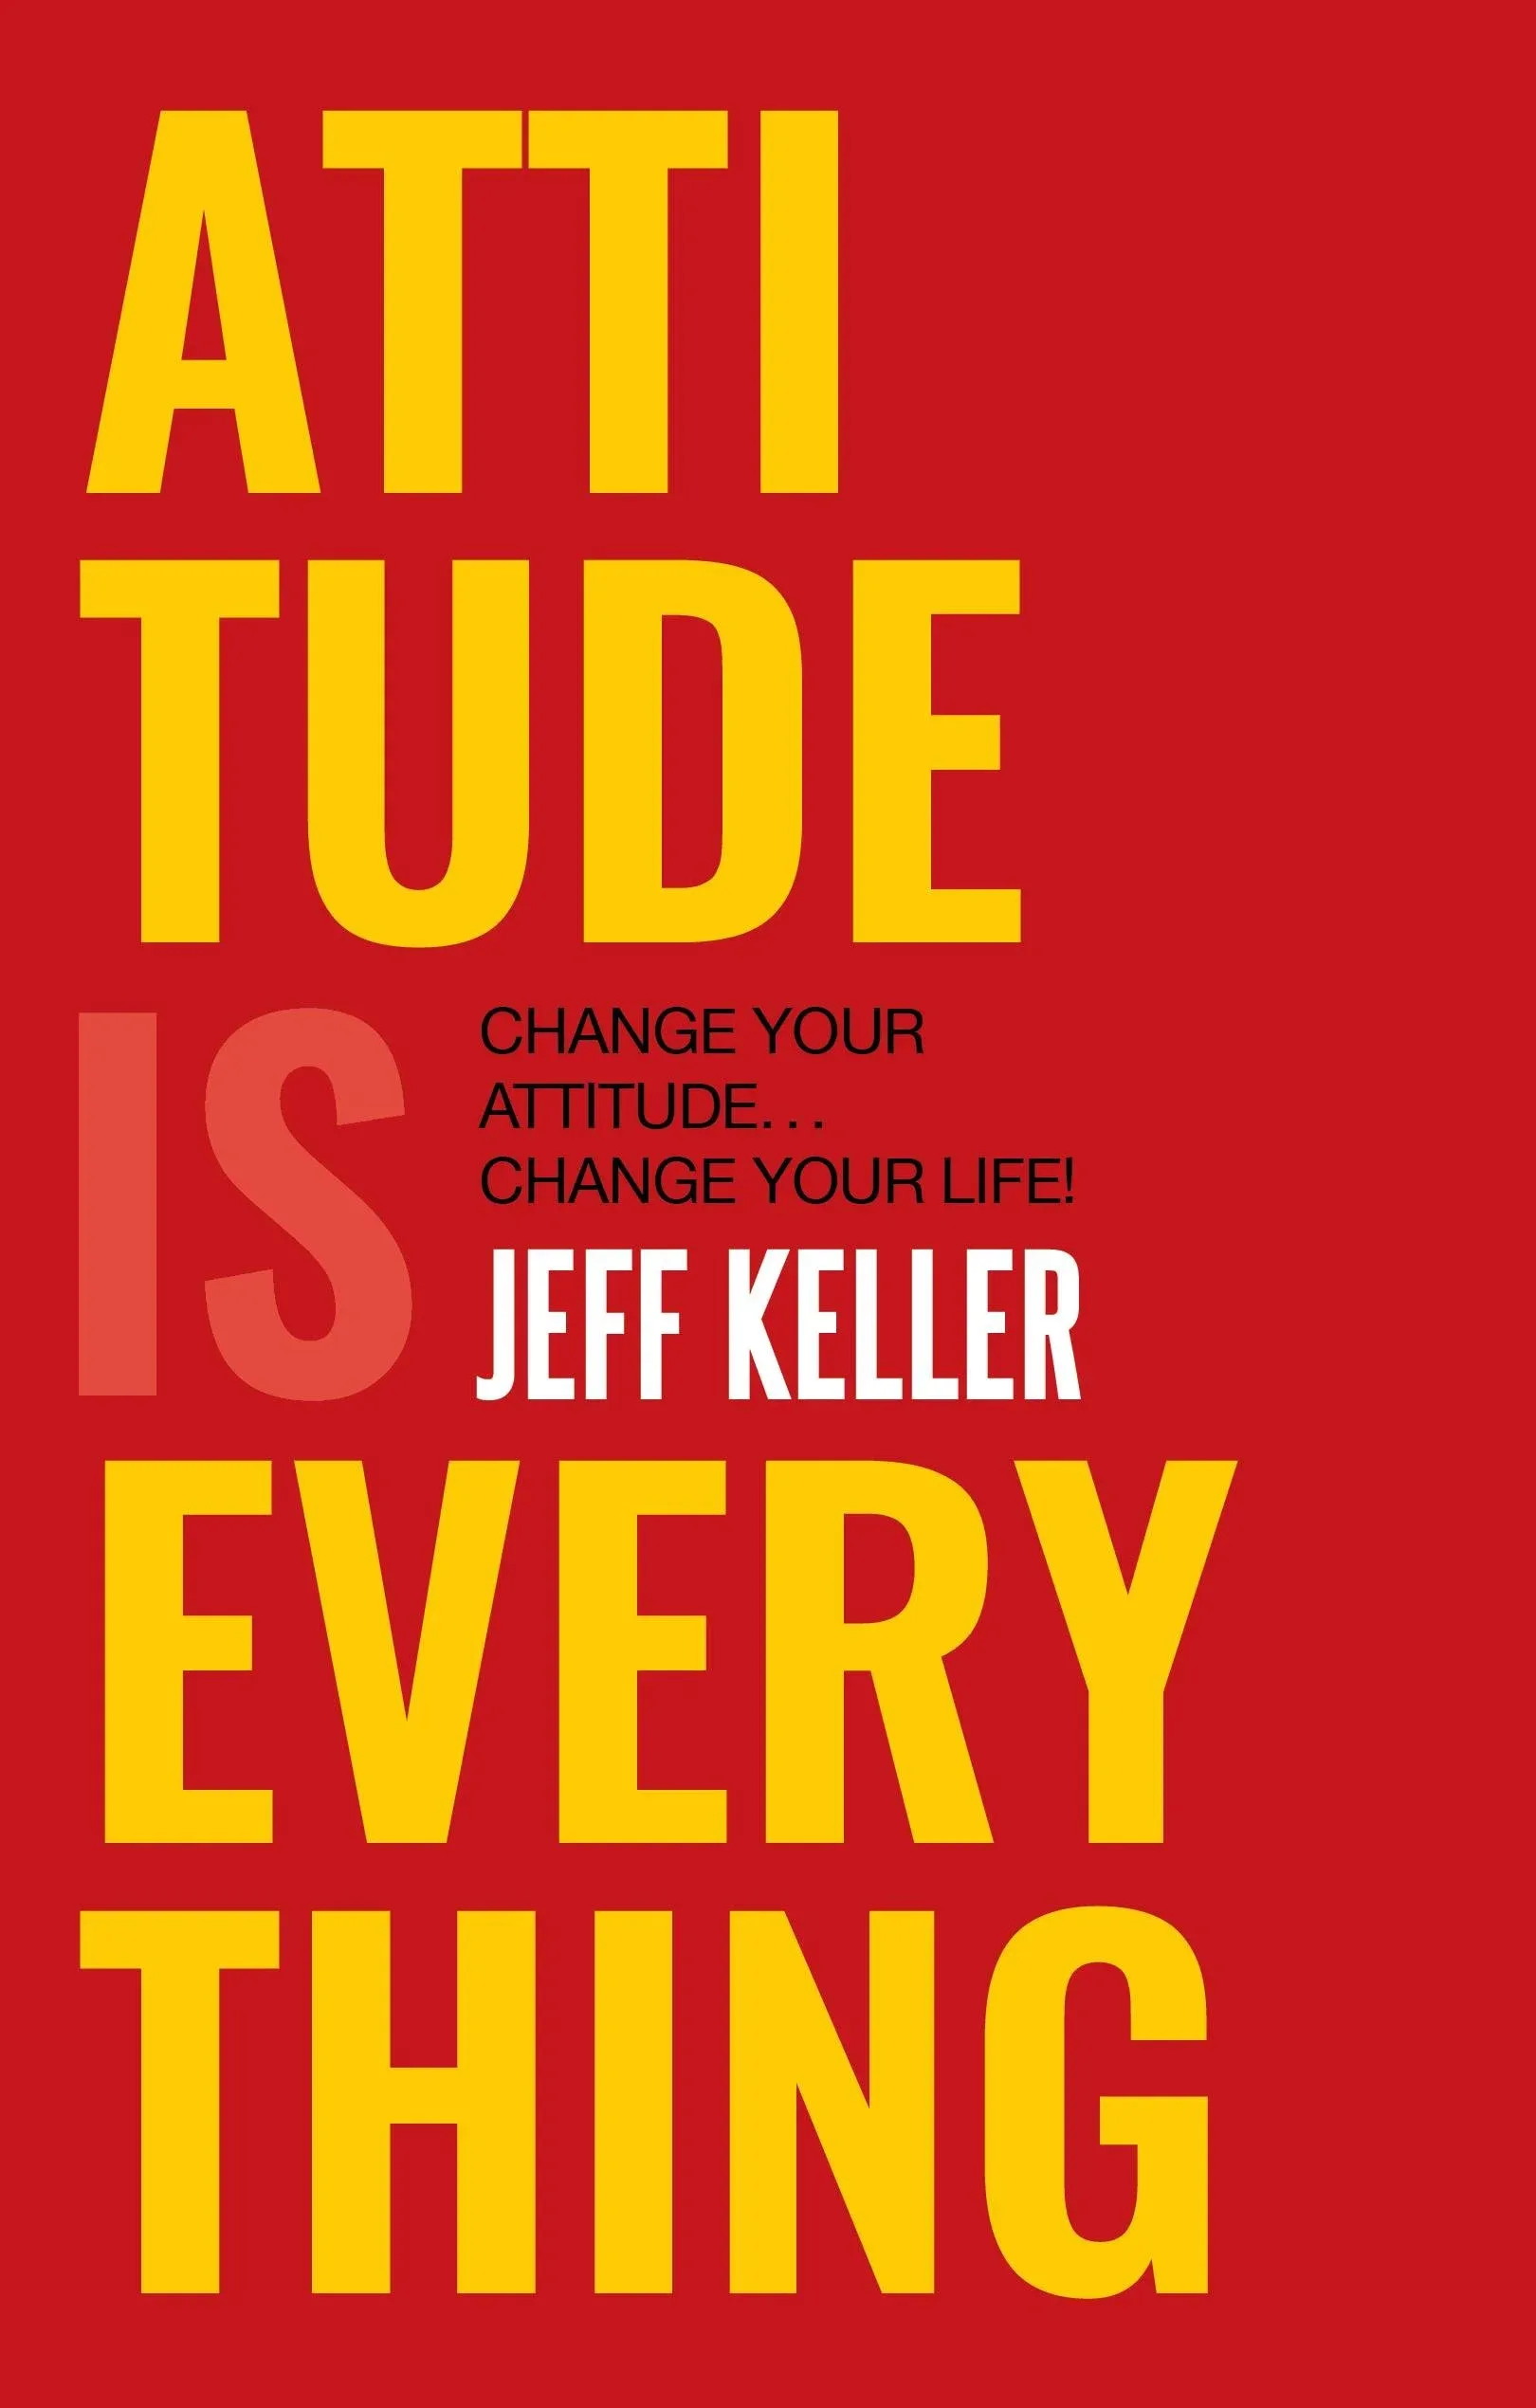 Attitude Is Everything (Jeff Keller) - Book Summary, Notes & Highlights